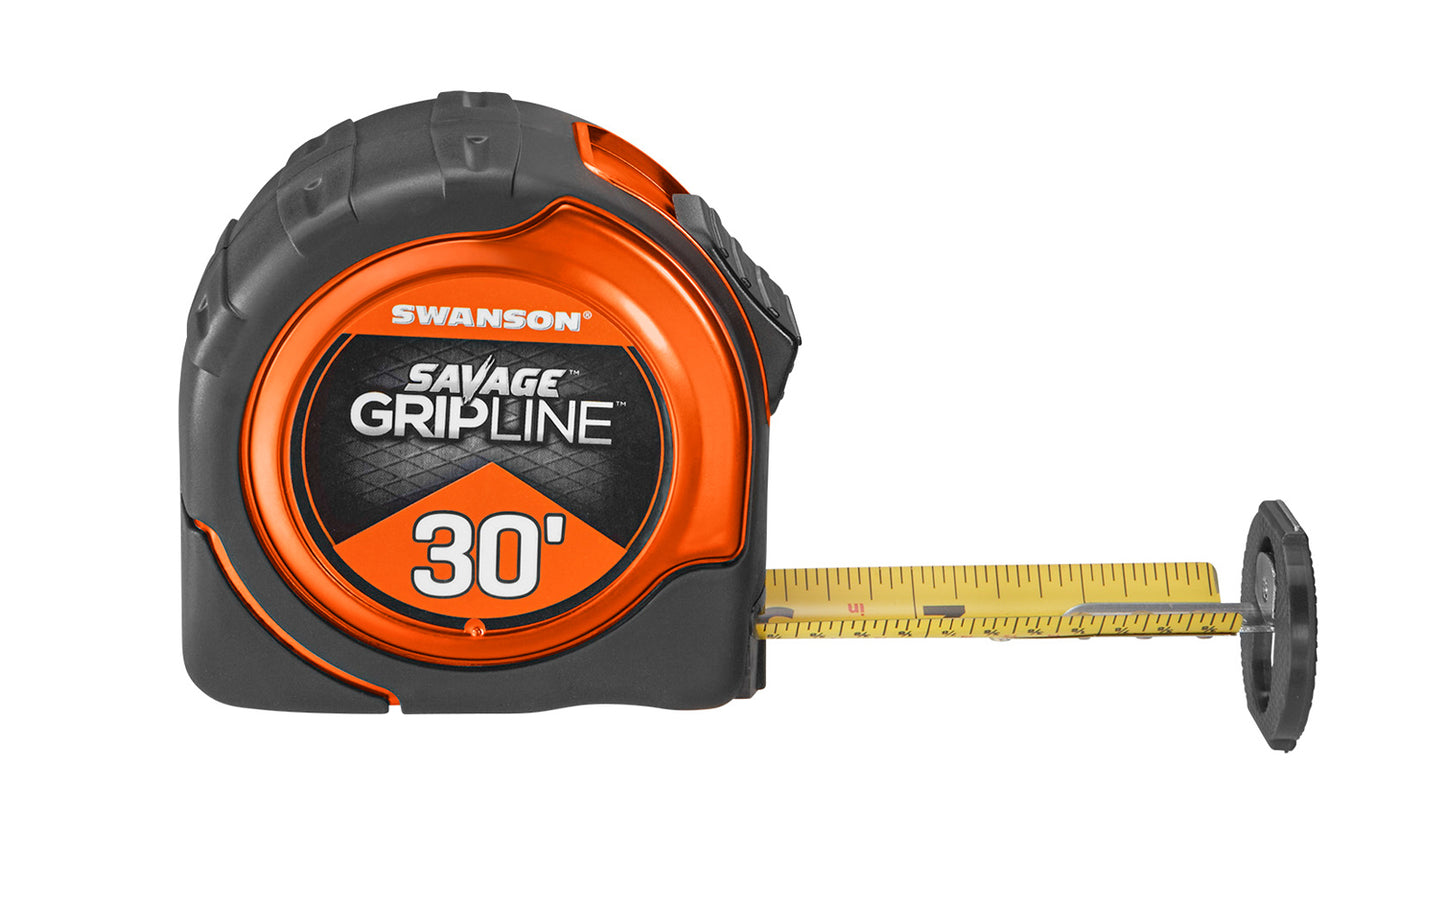 Swanson Savage Gripline 30' Tape Measure ~ Magnetic Tip - Model SVGL30M1 - Grips PVC, Conduit & Pipe up to 2" in diameter